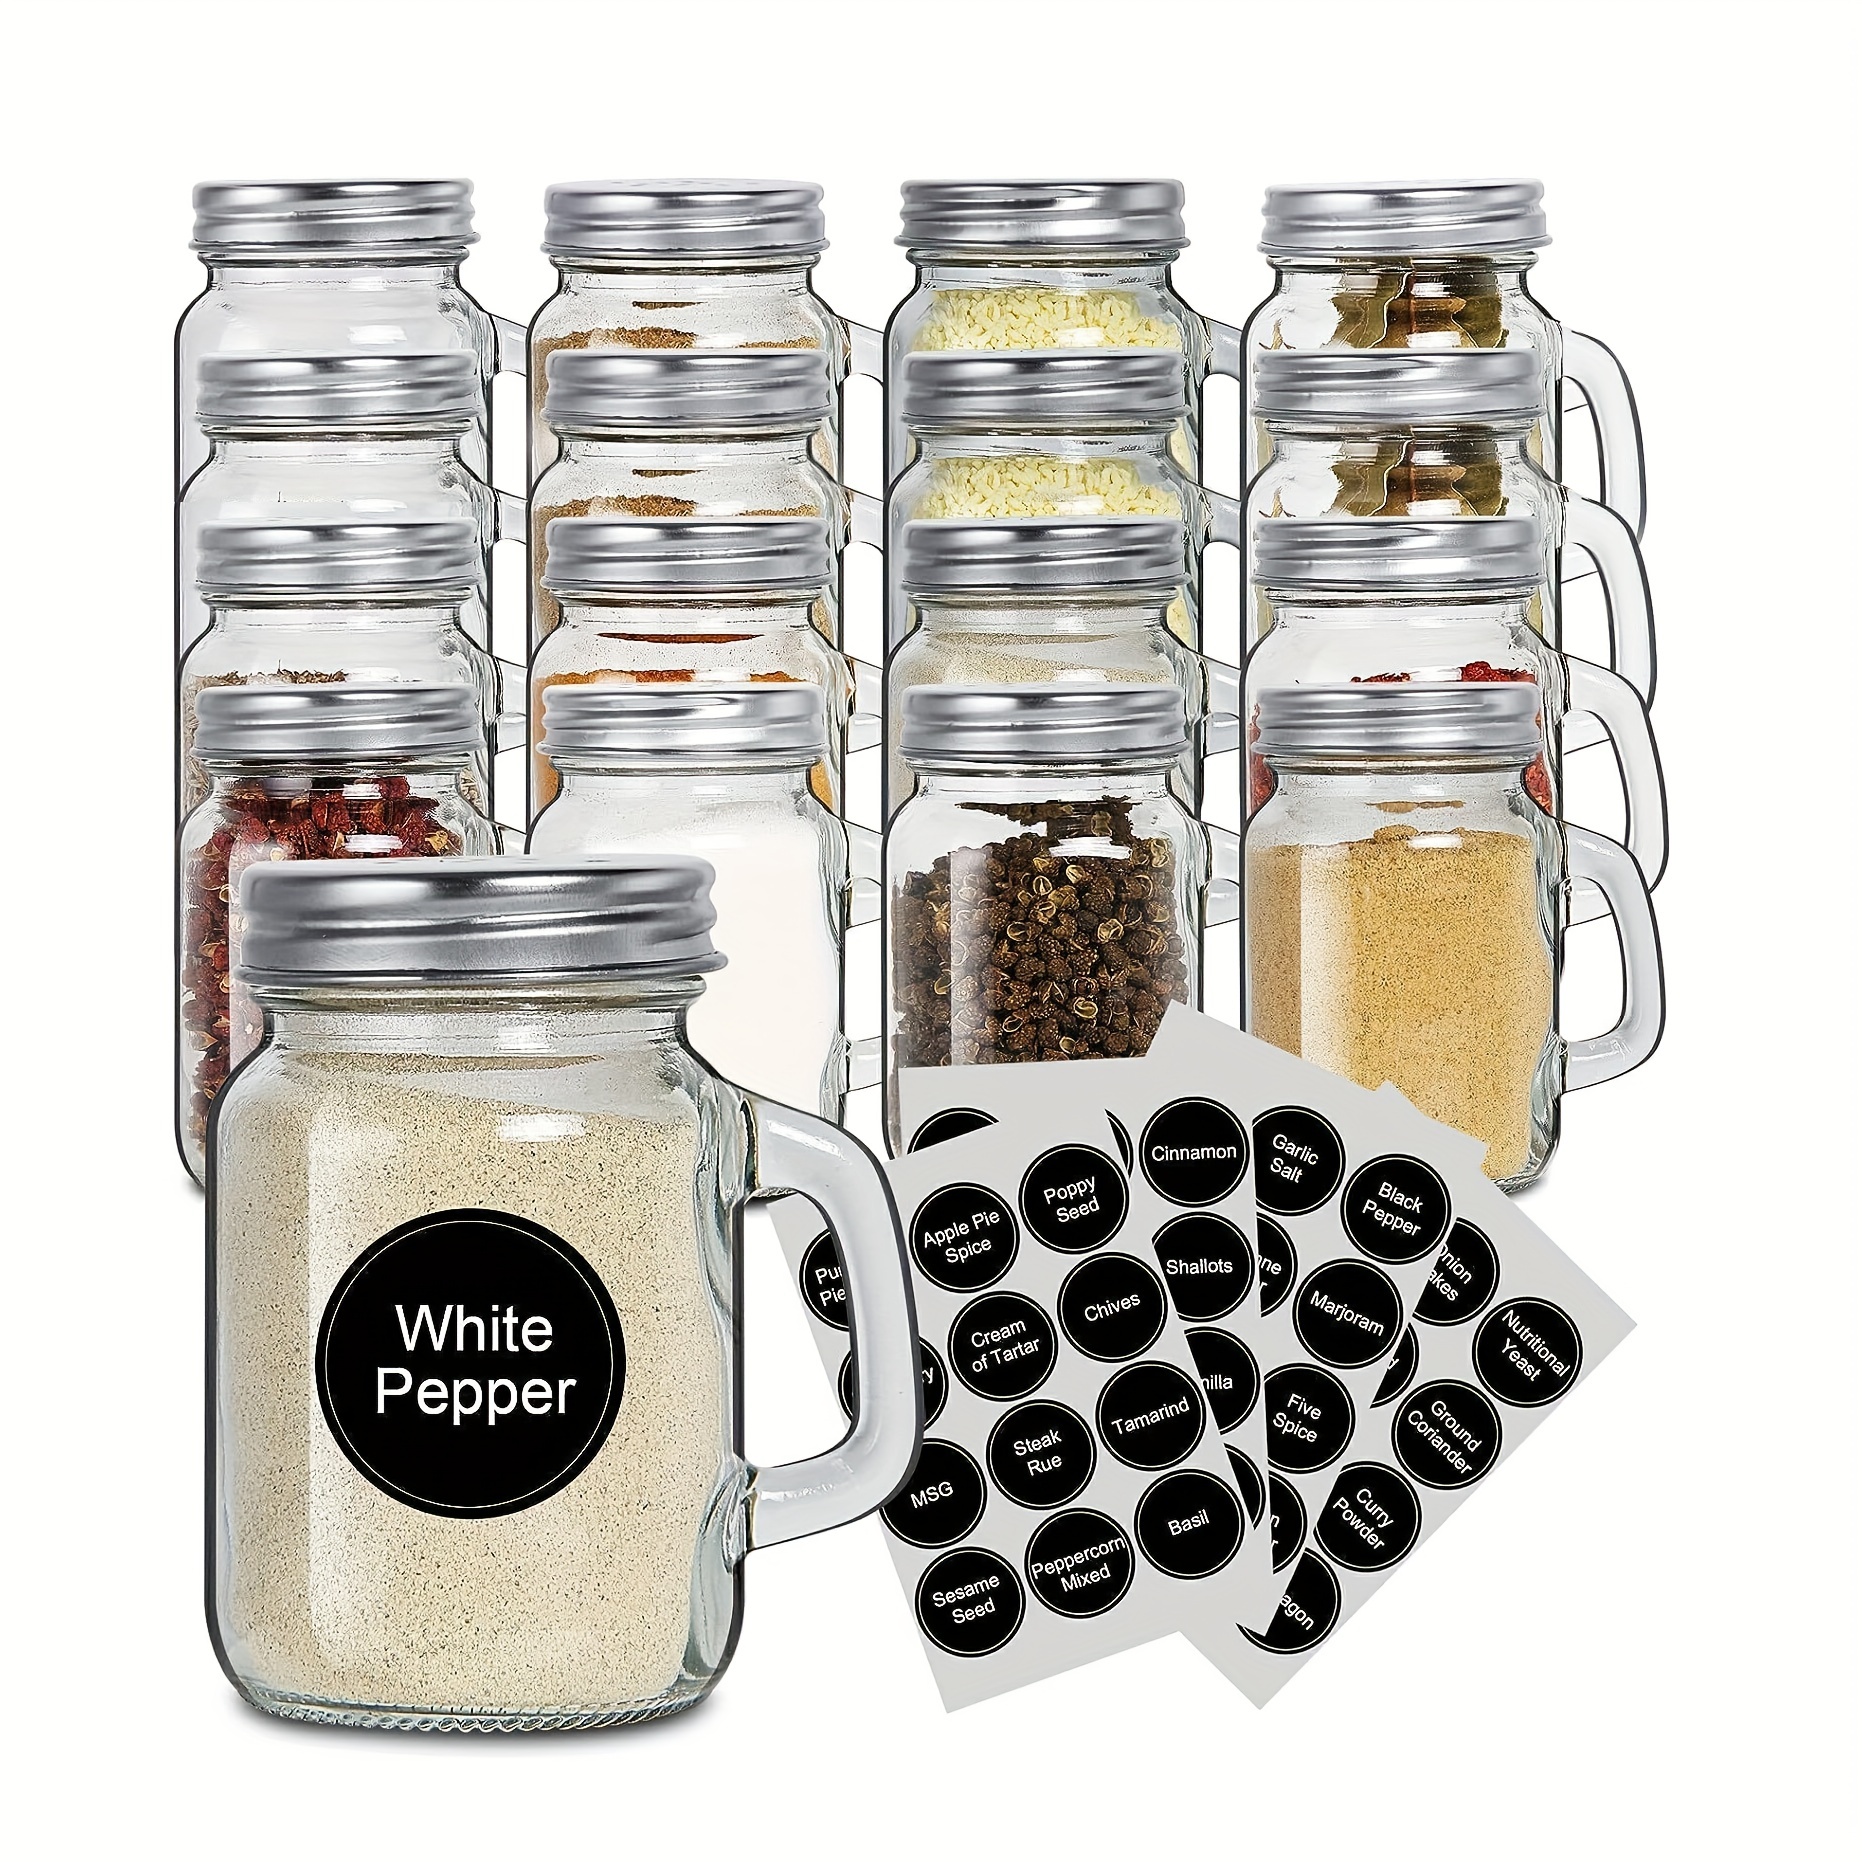 Spice Jars With Label 8oz 16pcs 8oz Glass Spice Jars With Shaker